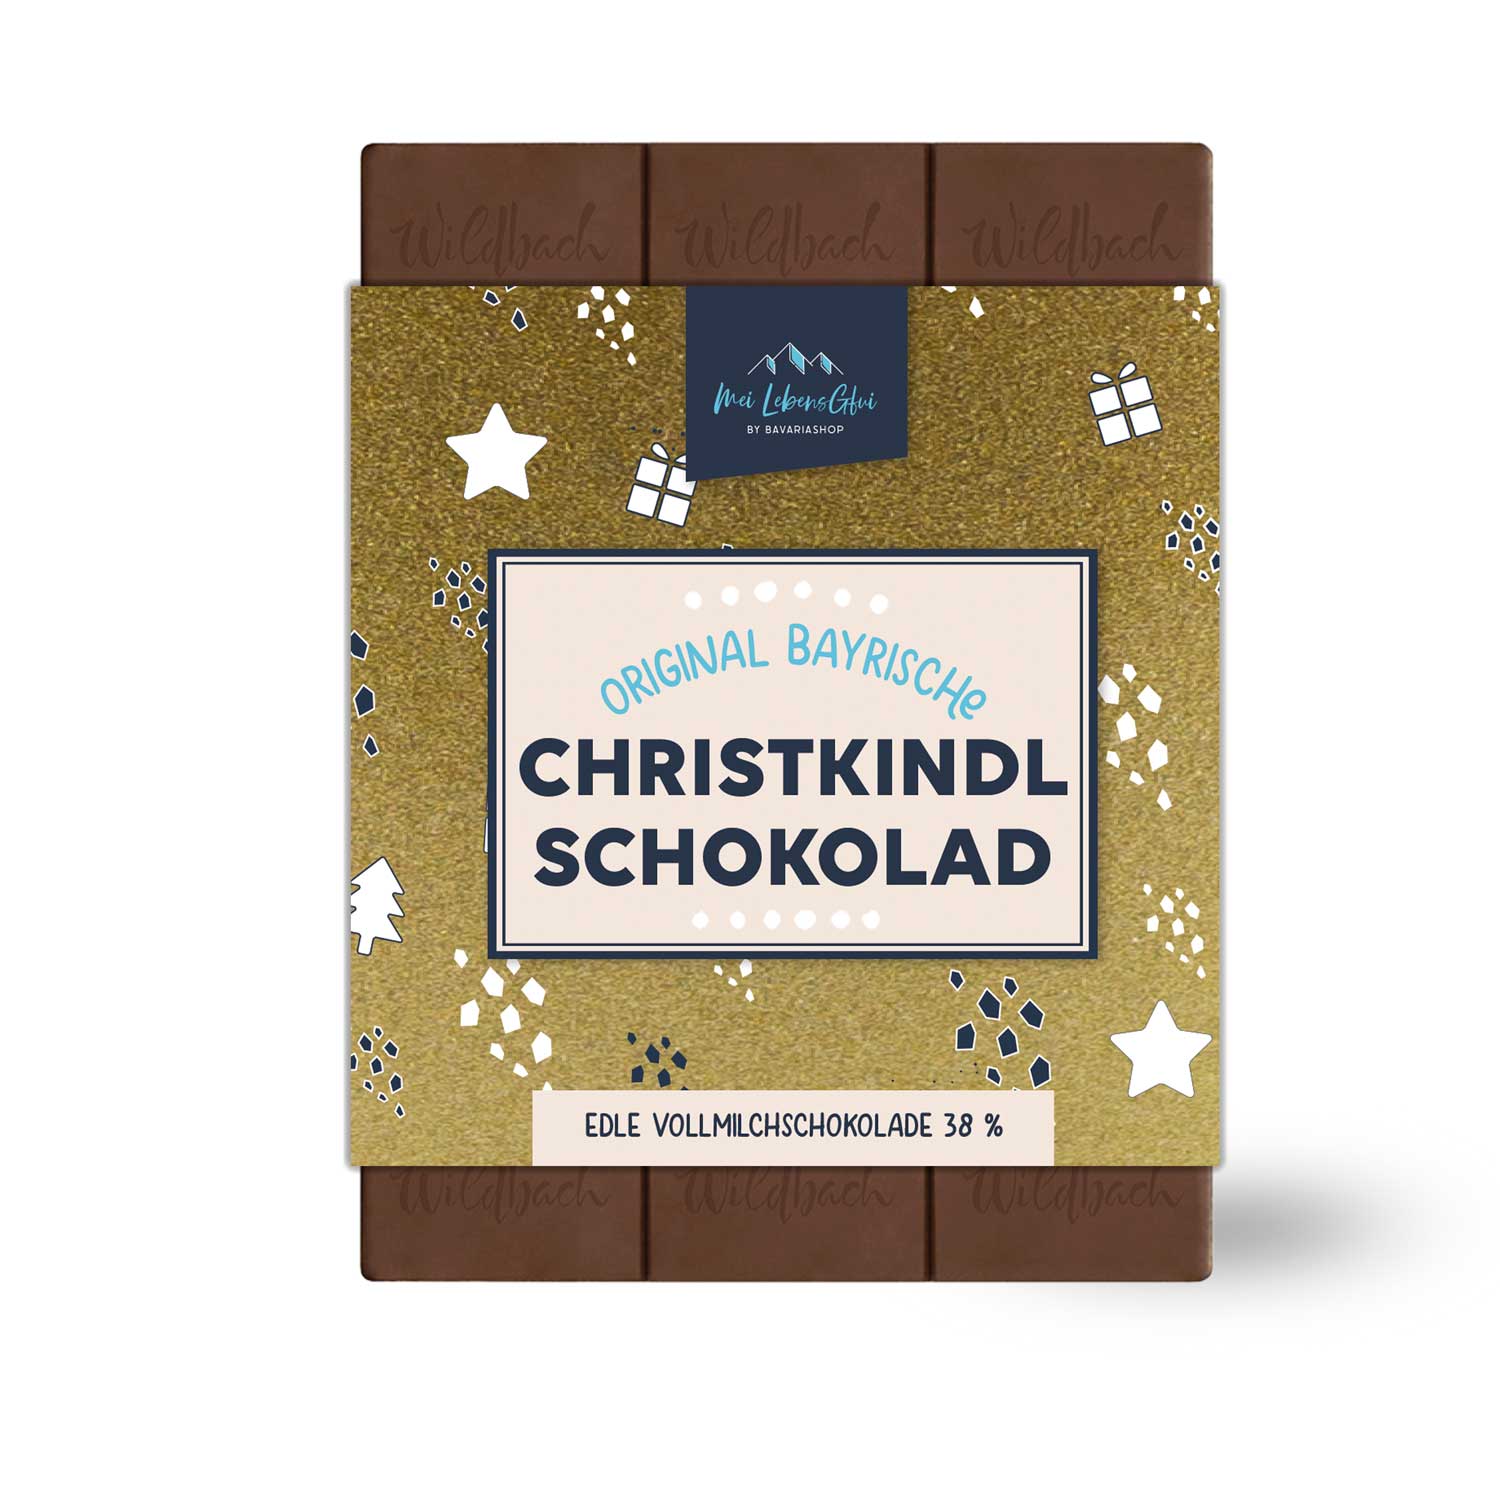 Christkindl Schokolad